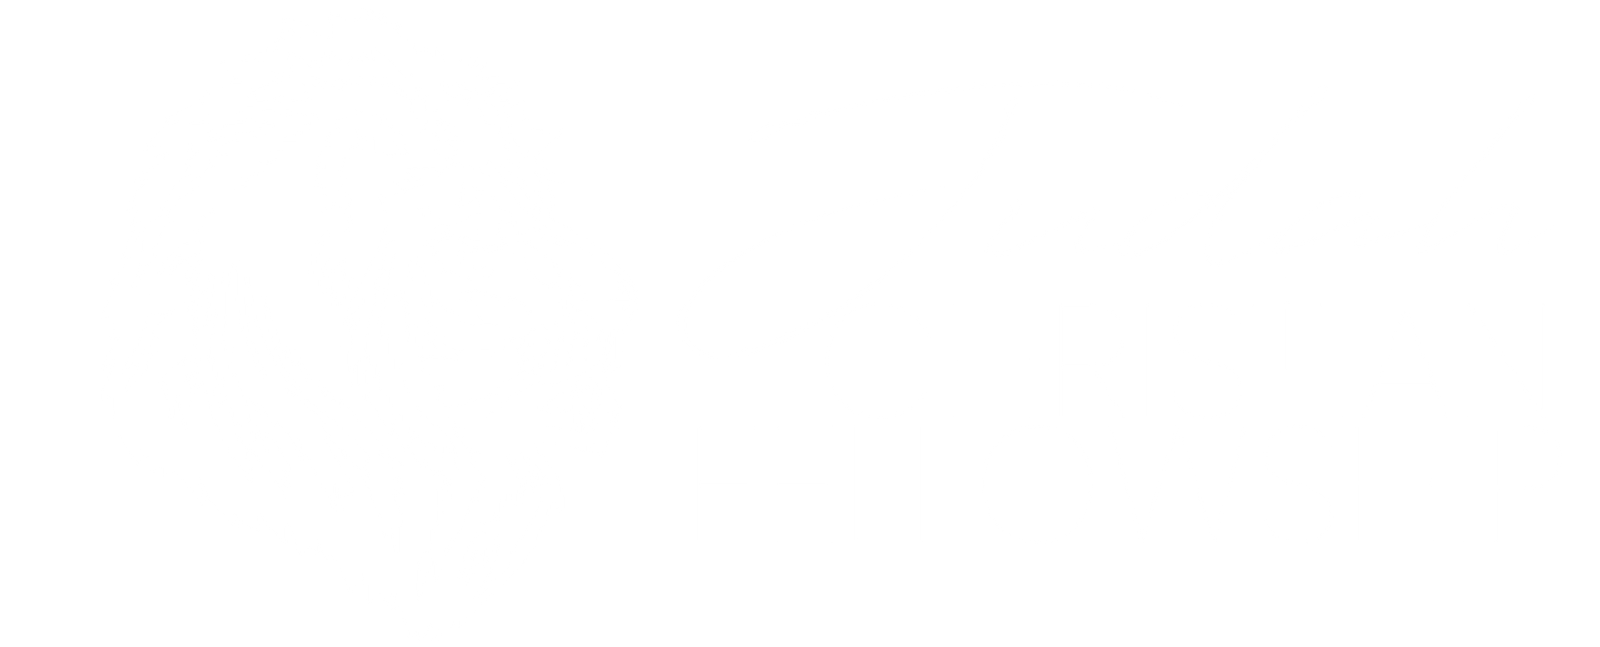 Judah Christian Fellowship